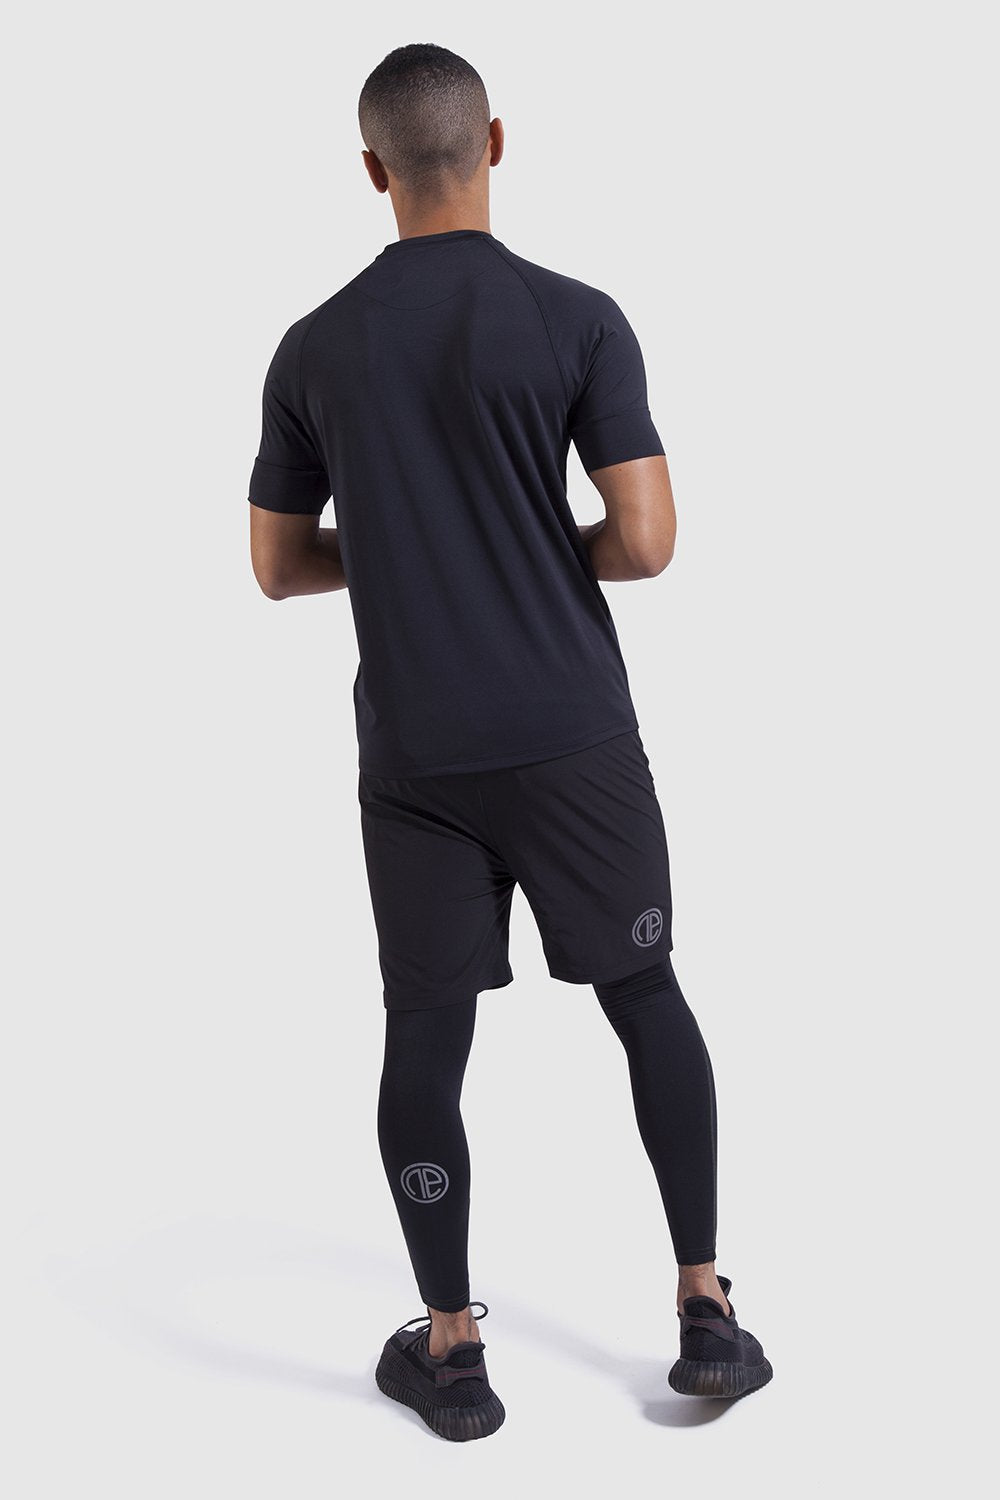 back detail on mens training shorts and leggings